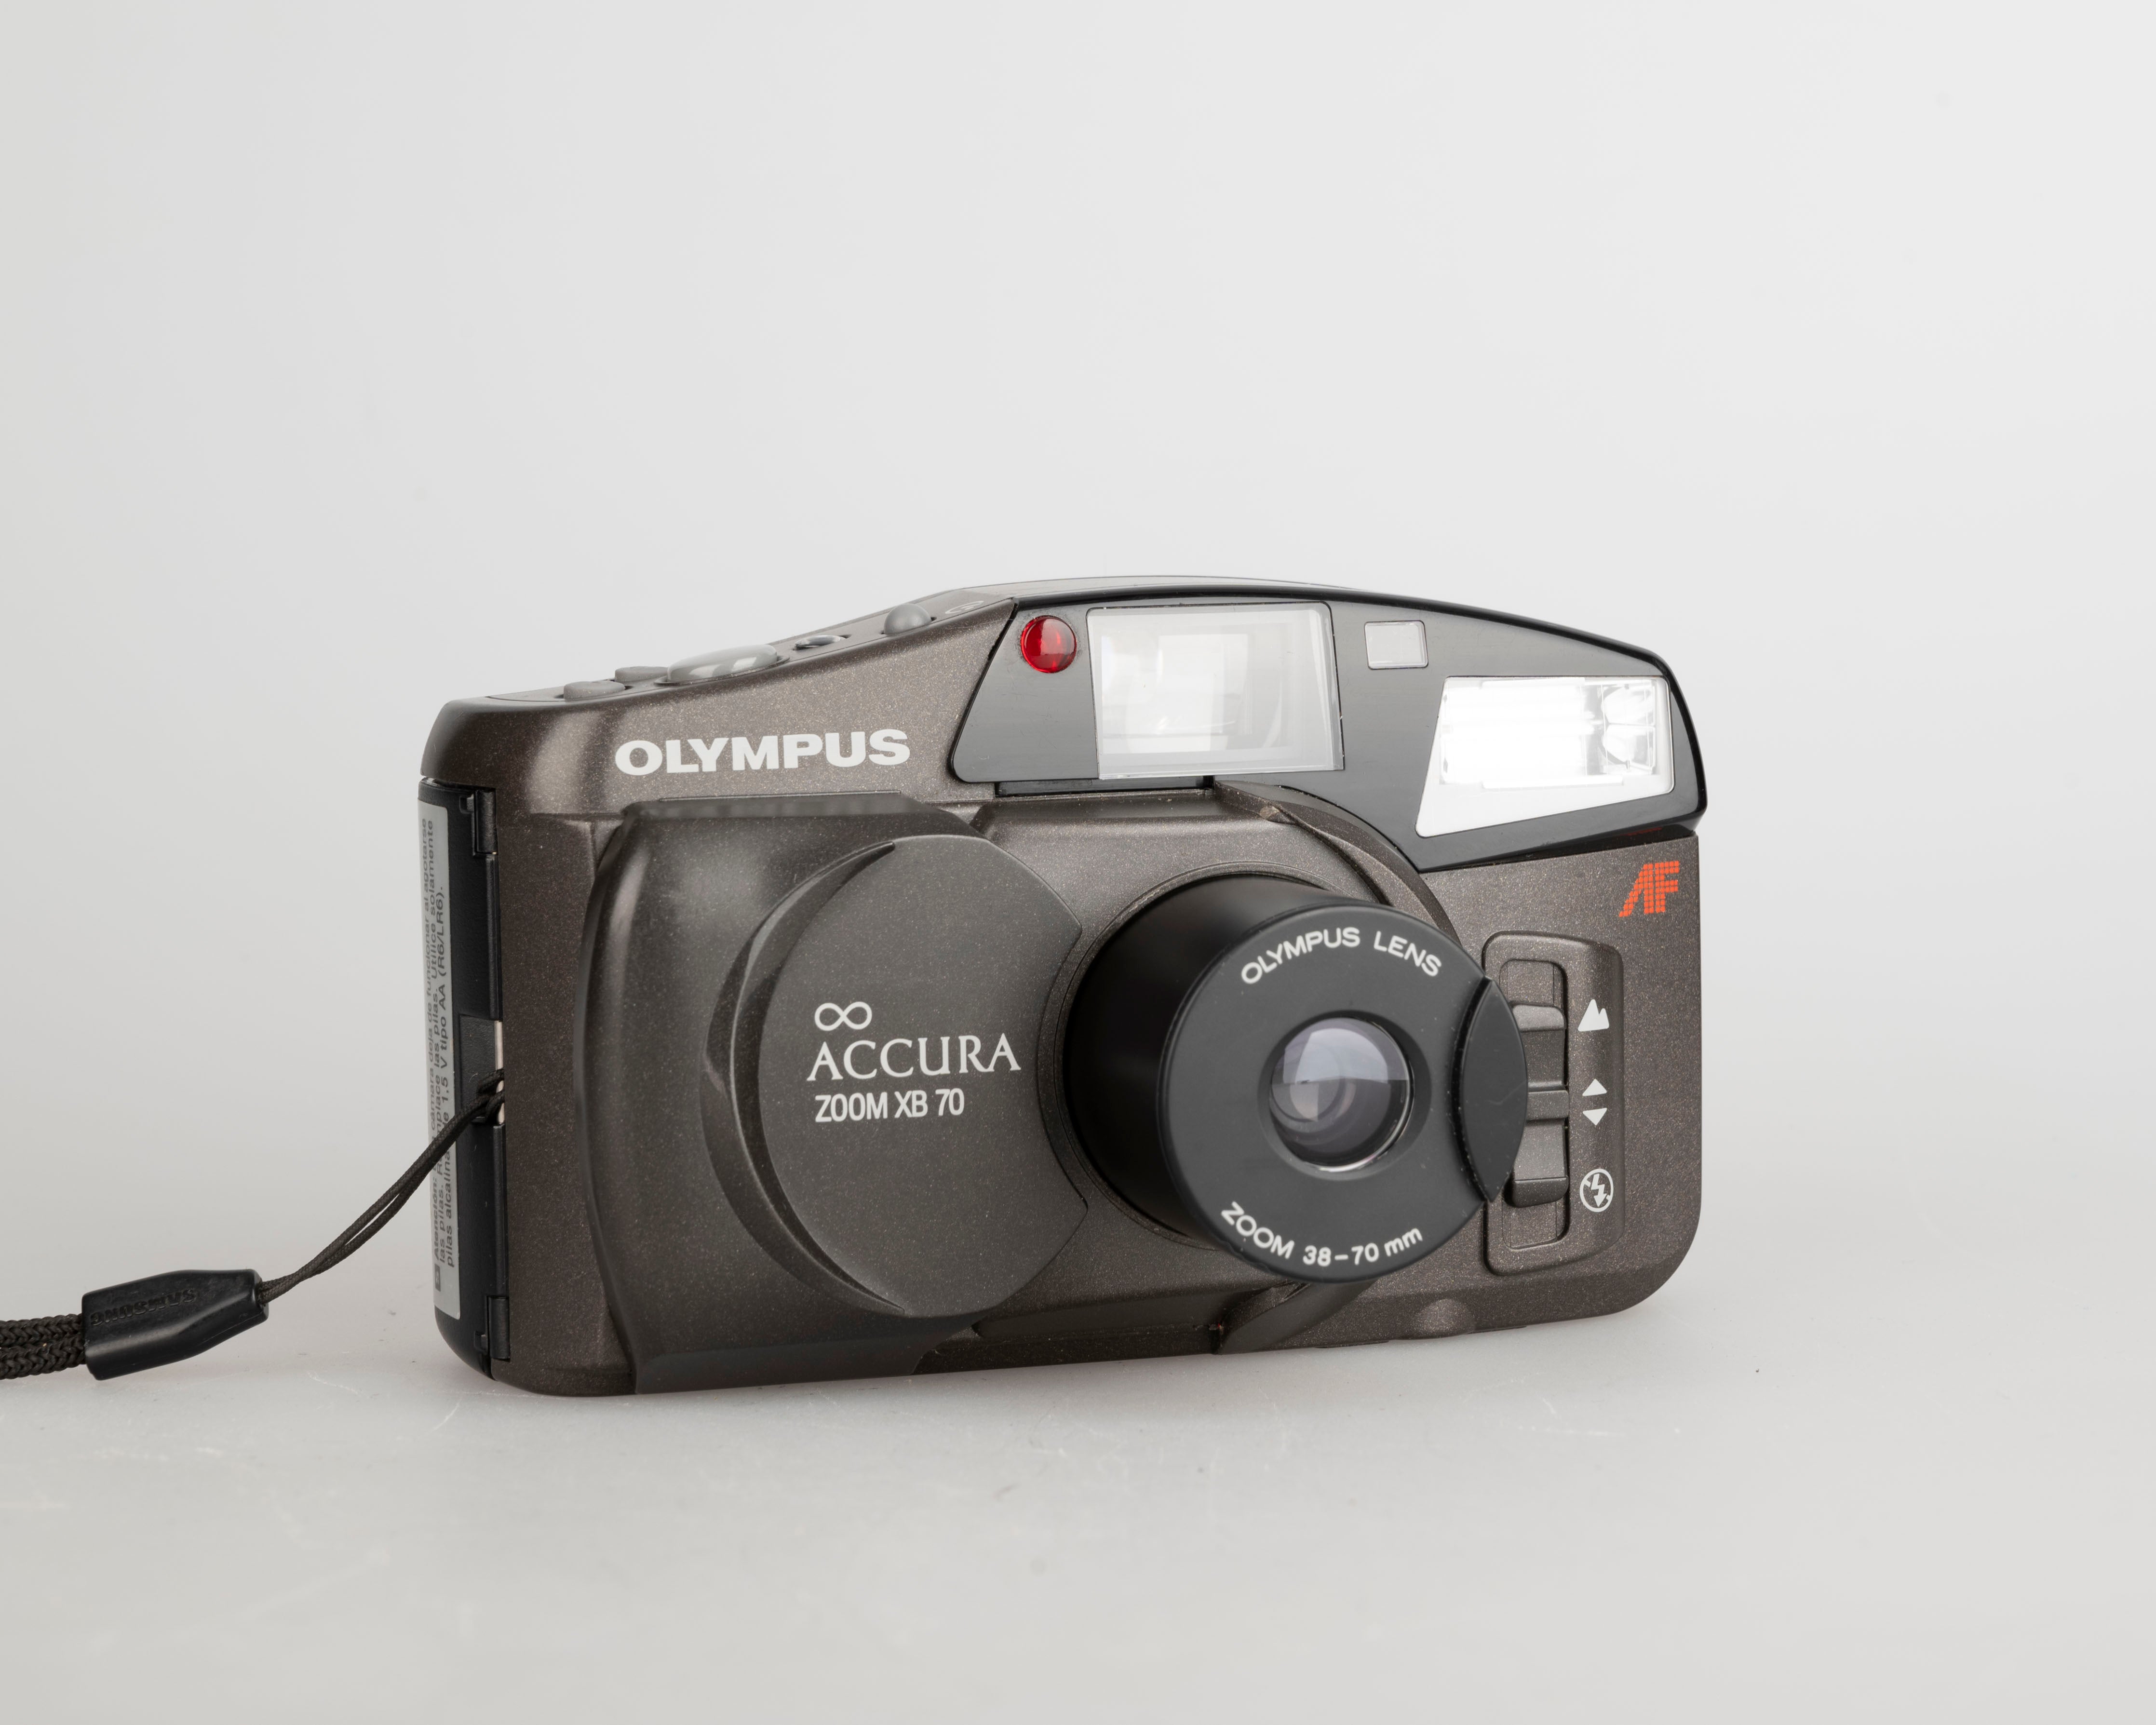 Olympus Infinity Accura Zoom XB70 35mm camera – New Wave Pool